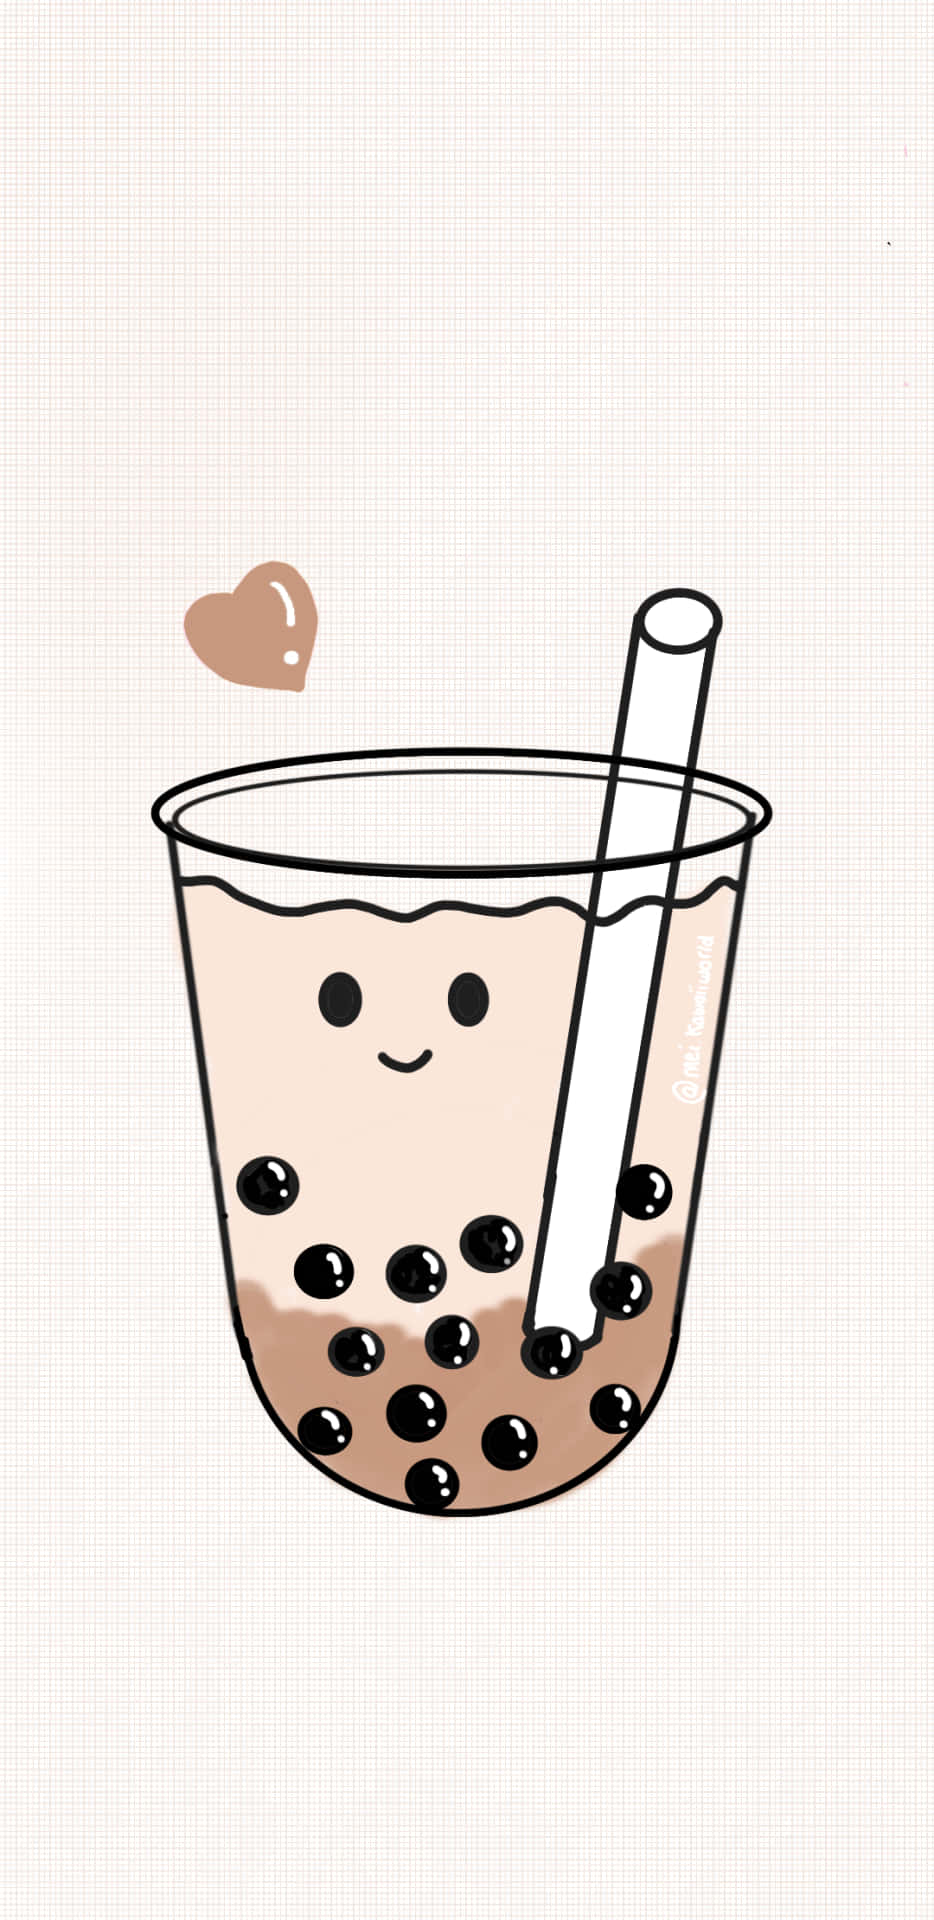 Free Cute Boba Tea Wallpaper Downloads, Cute Boba Tea Wallpaper for FREE